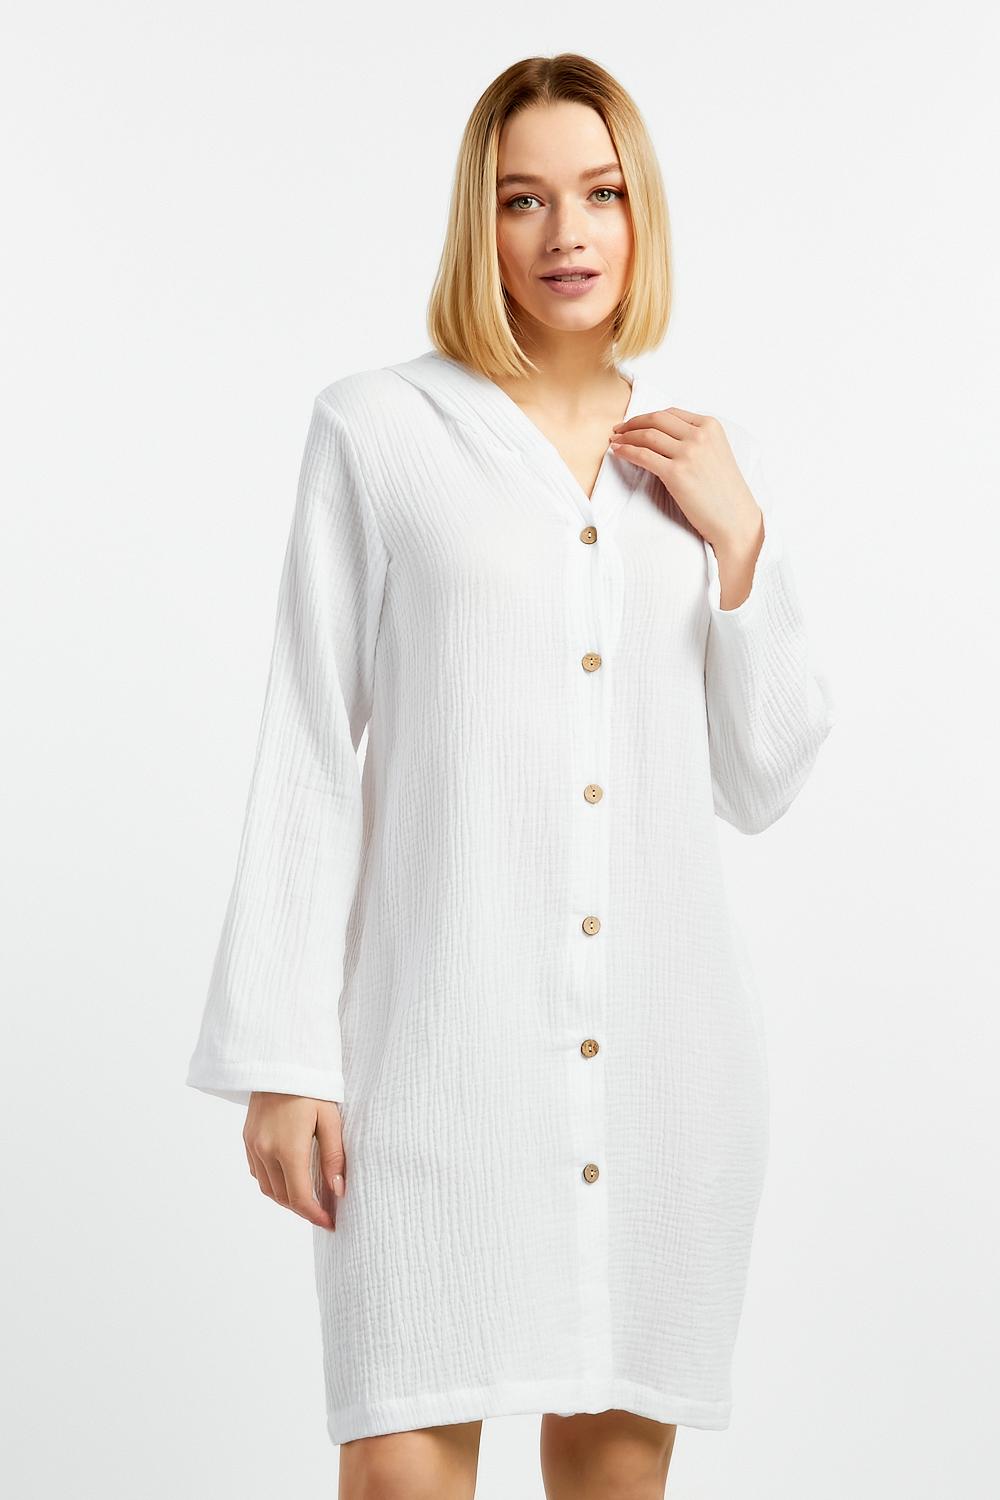 Платье женское LikaDress 18-1689 белое 50 RU